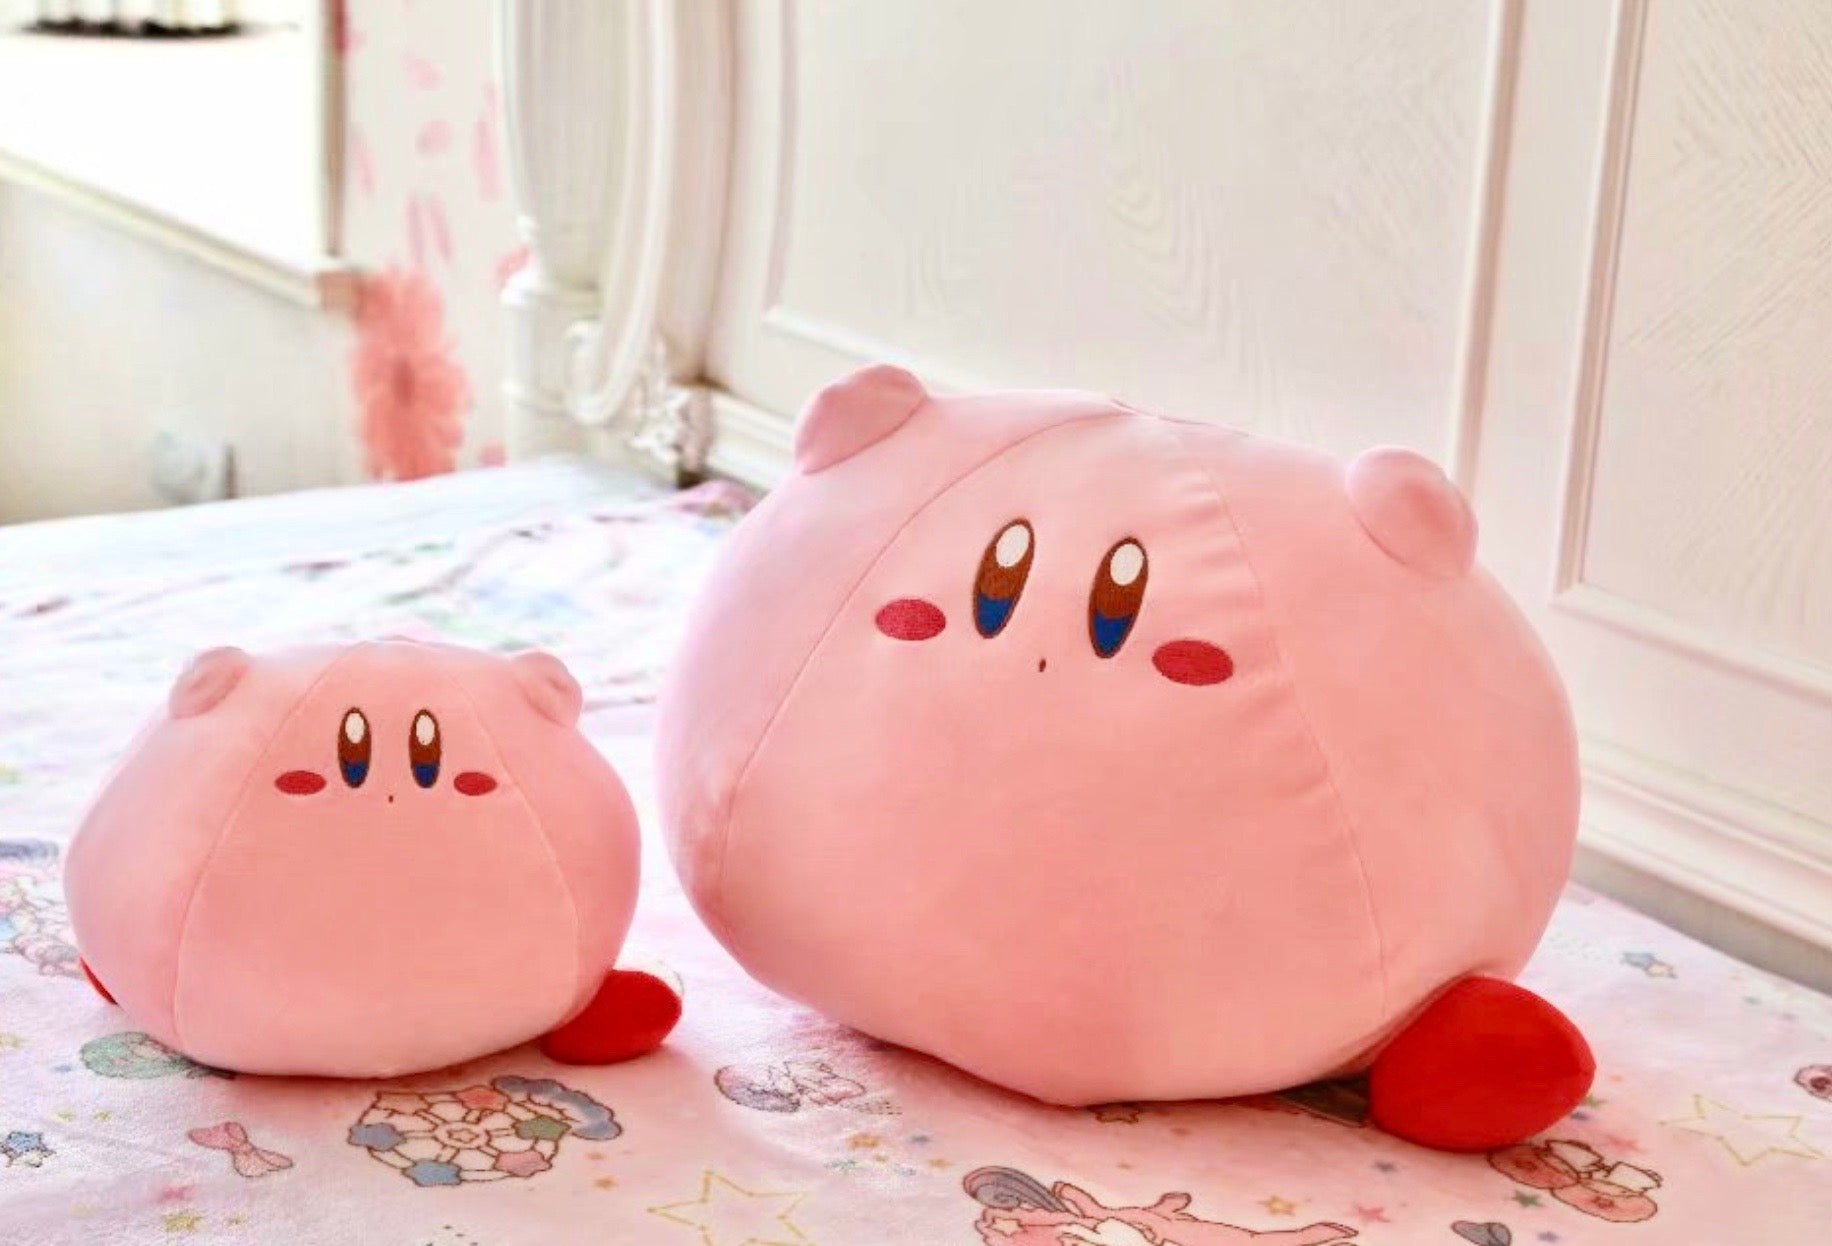 Kirby Dreams: Explore the Softness of Plush Toys